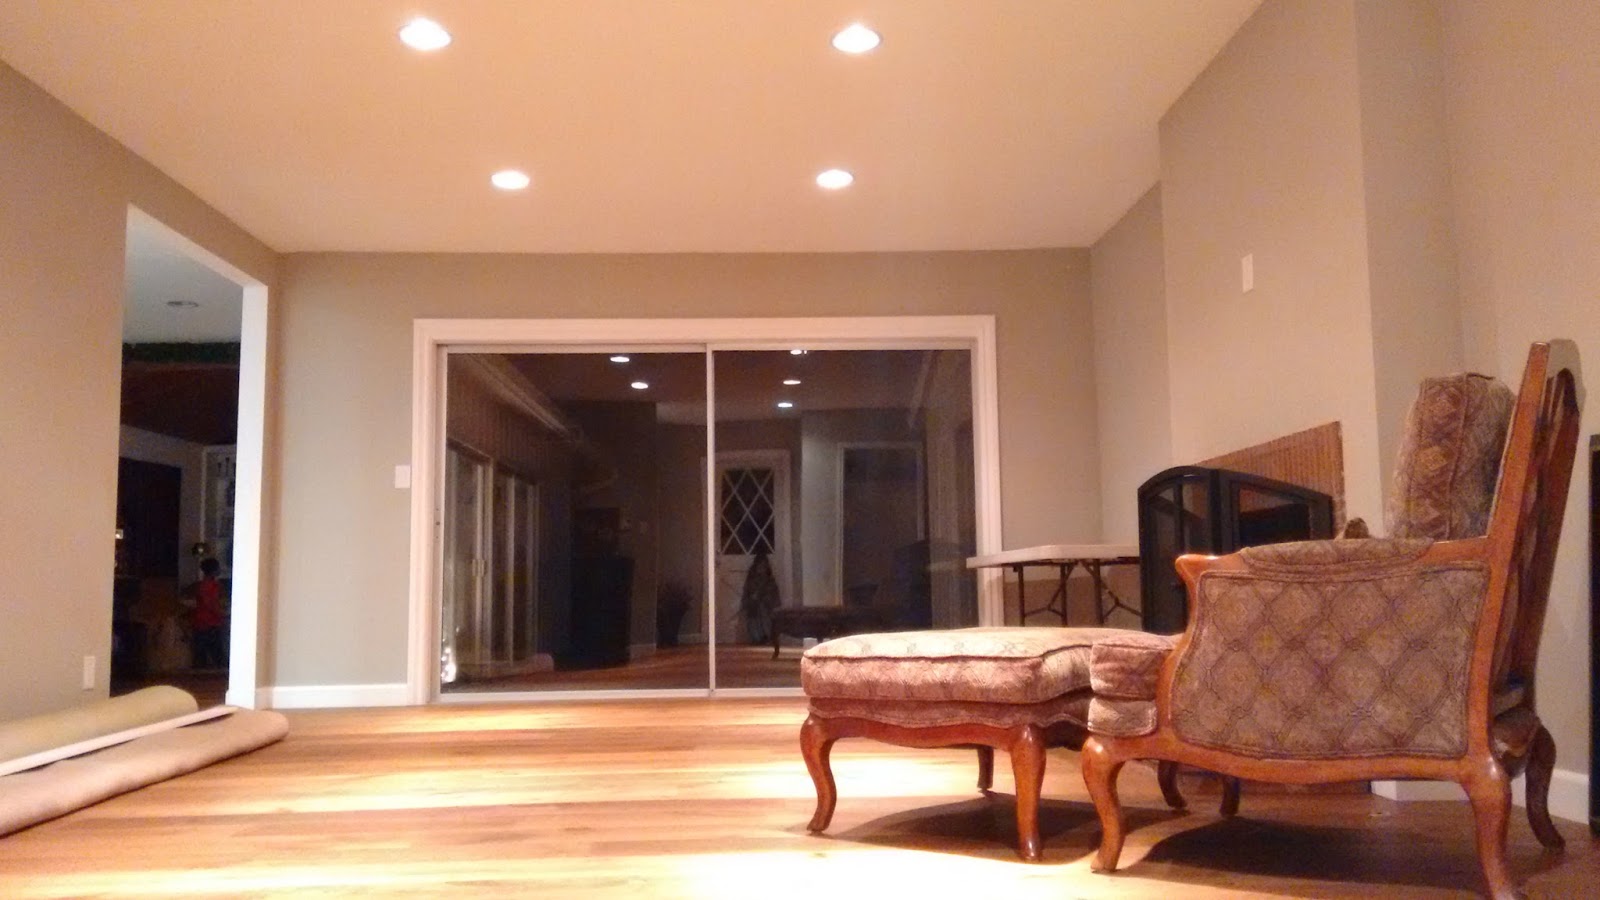 DIY home renovation remodel improvement project living room